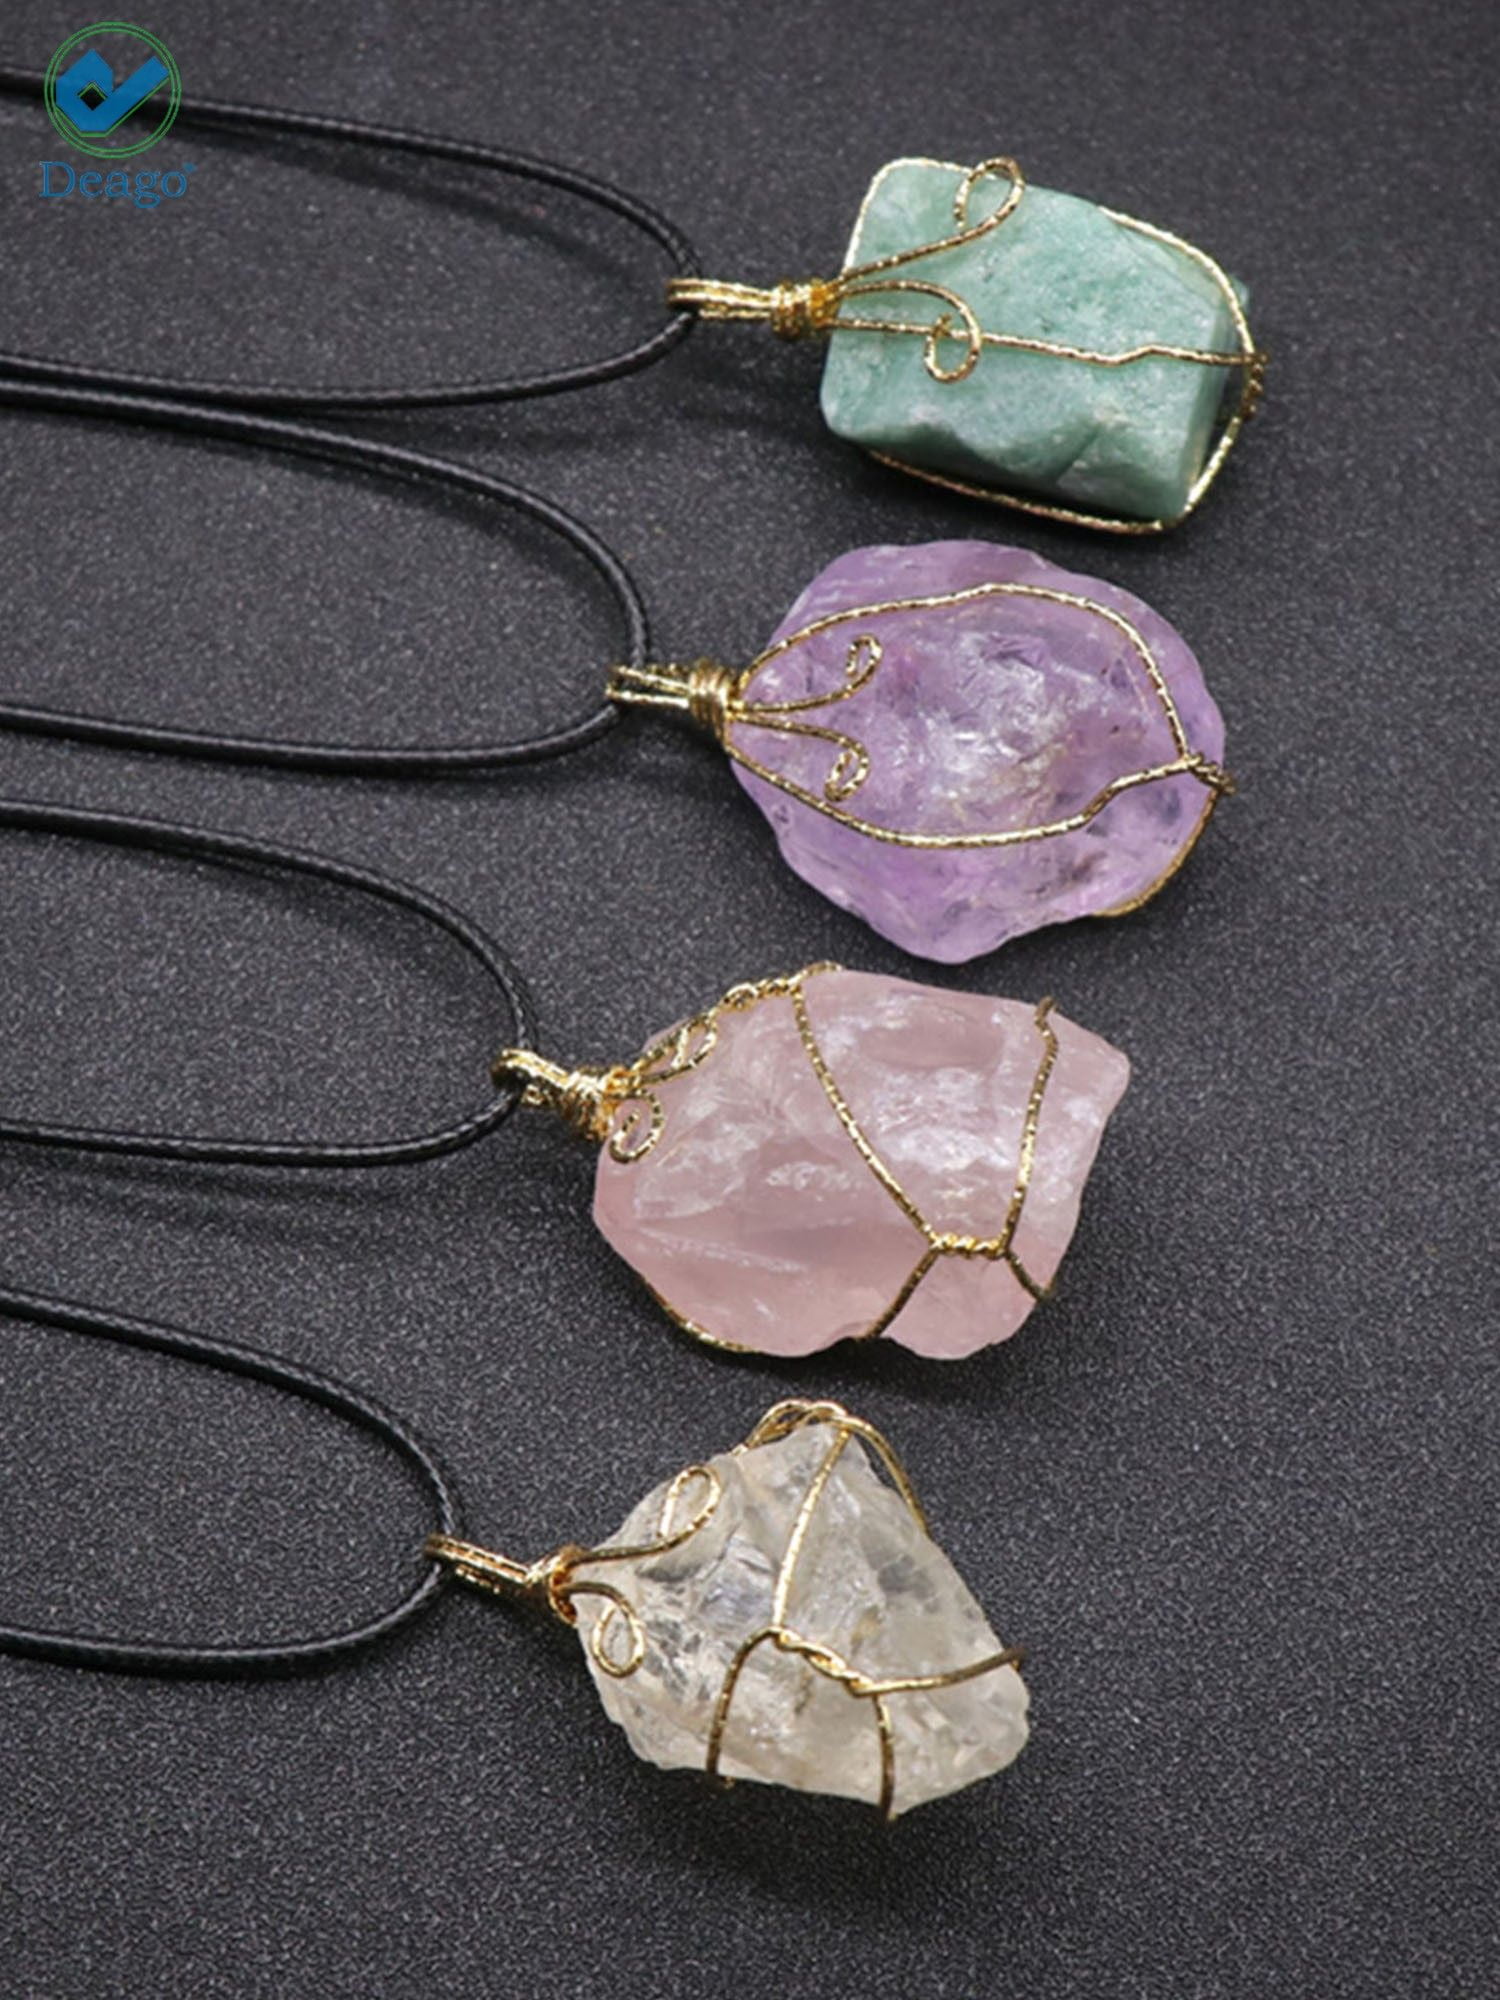 Natural  Rose quartz Pendant Finding Jewelry Supplies Gemstone Pendant Crystal Quartz Gold Plated pendant